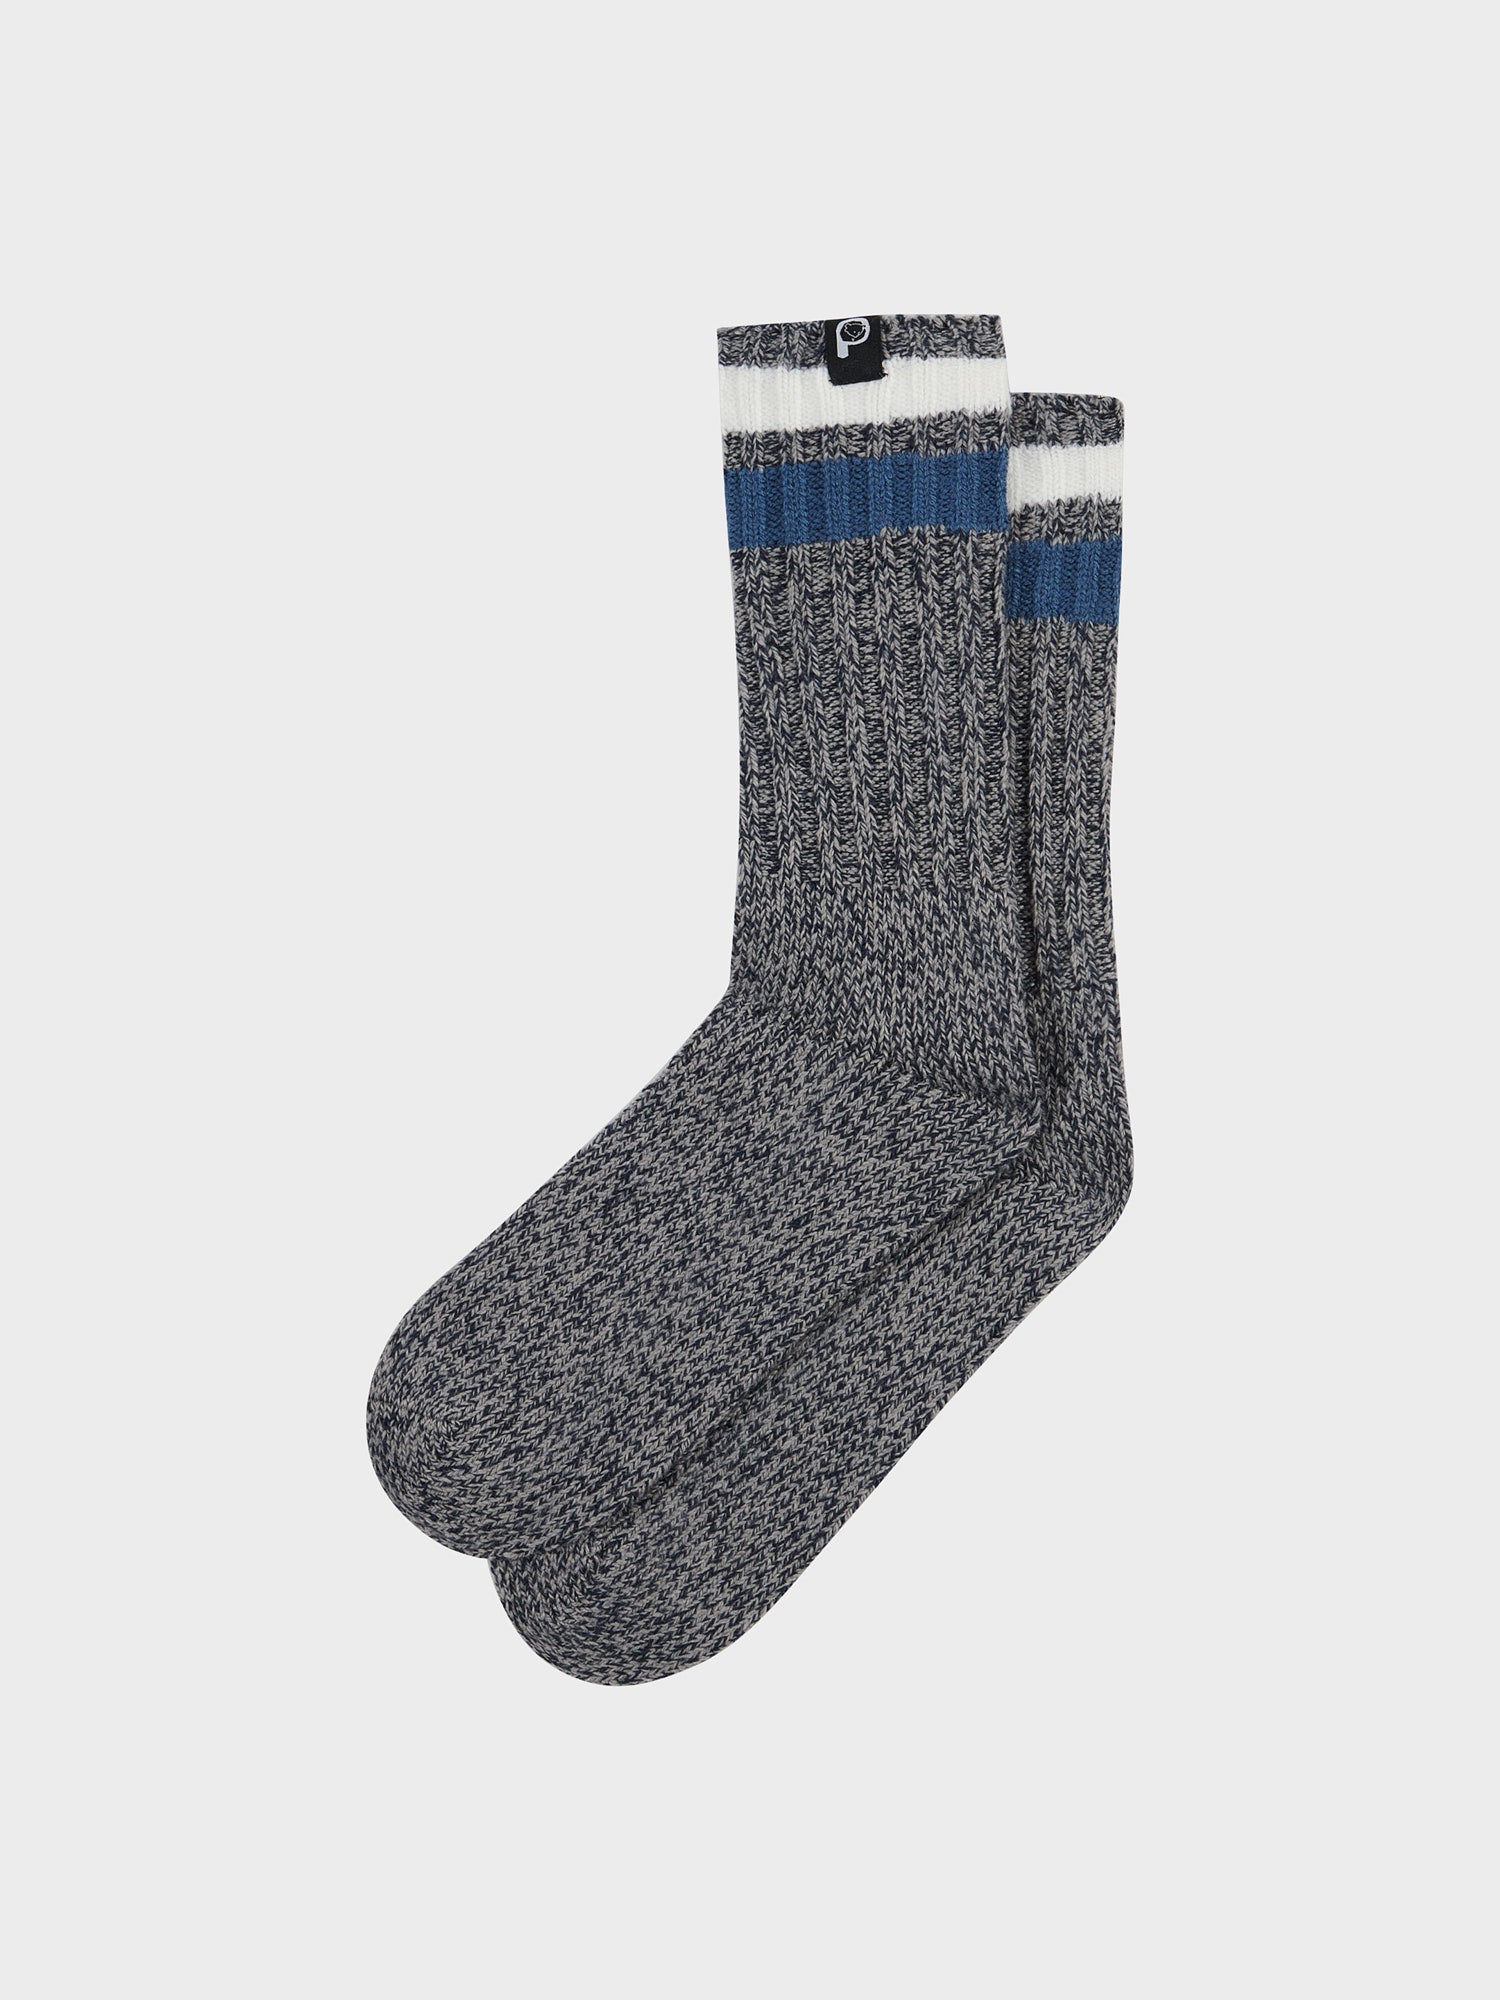 Twist Hiking Wool Blend Socks in Navy Blue